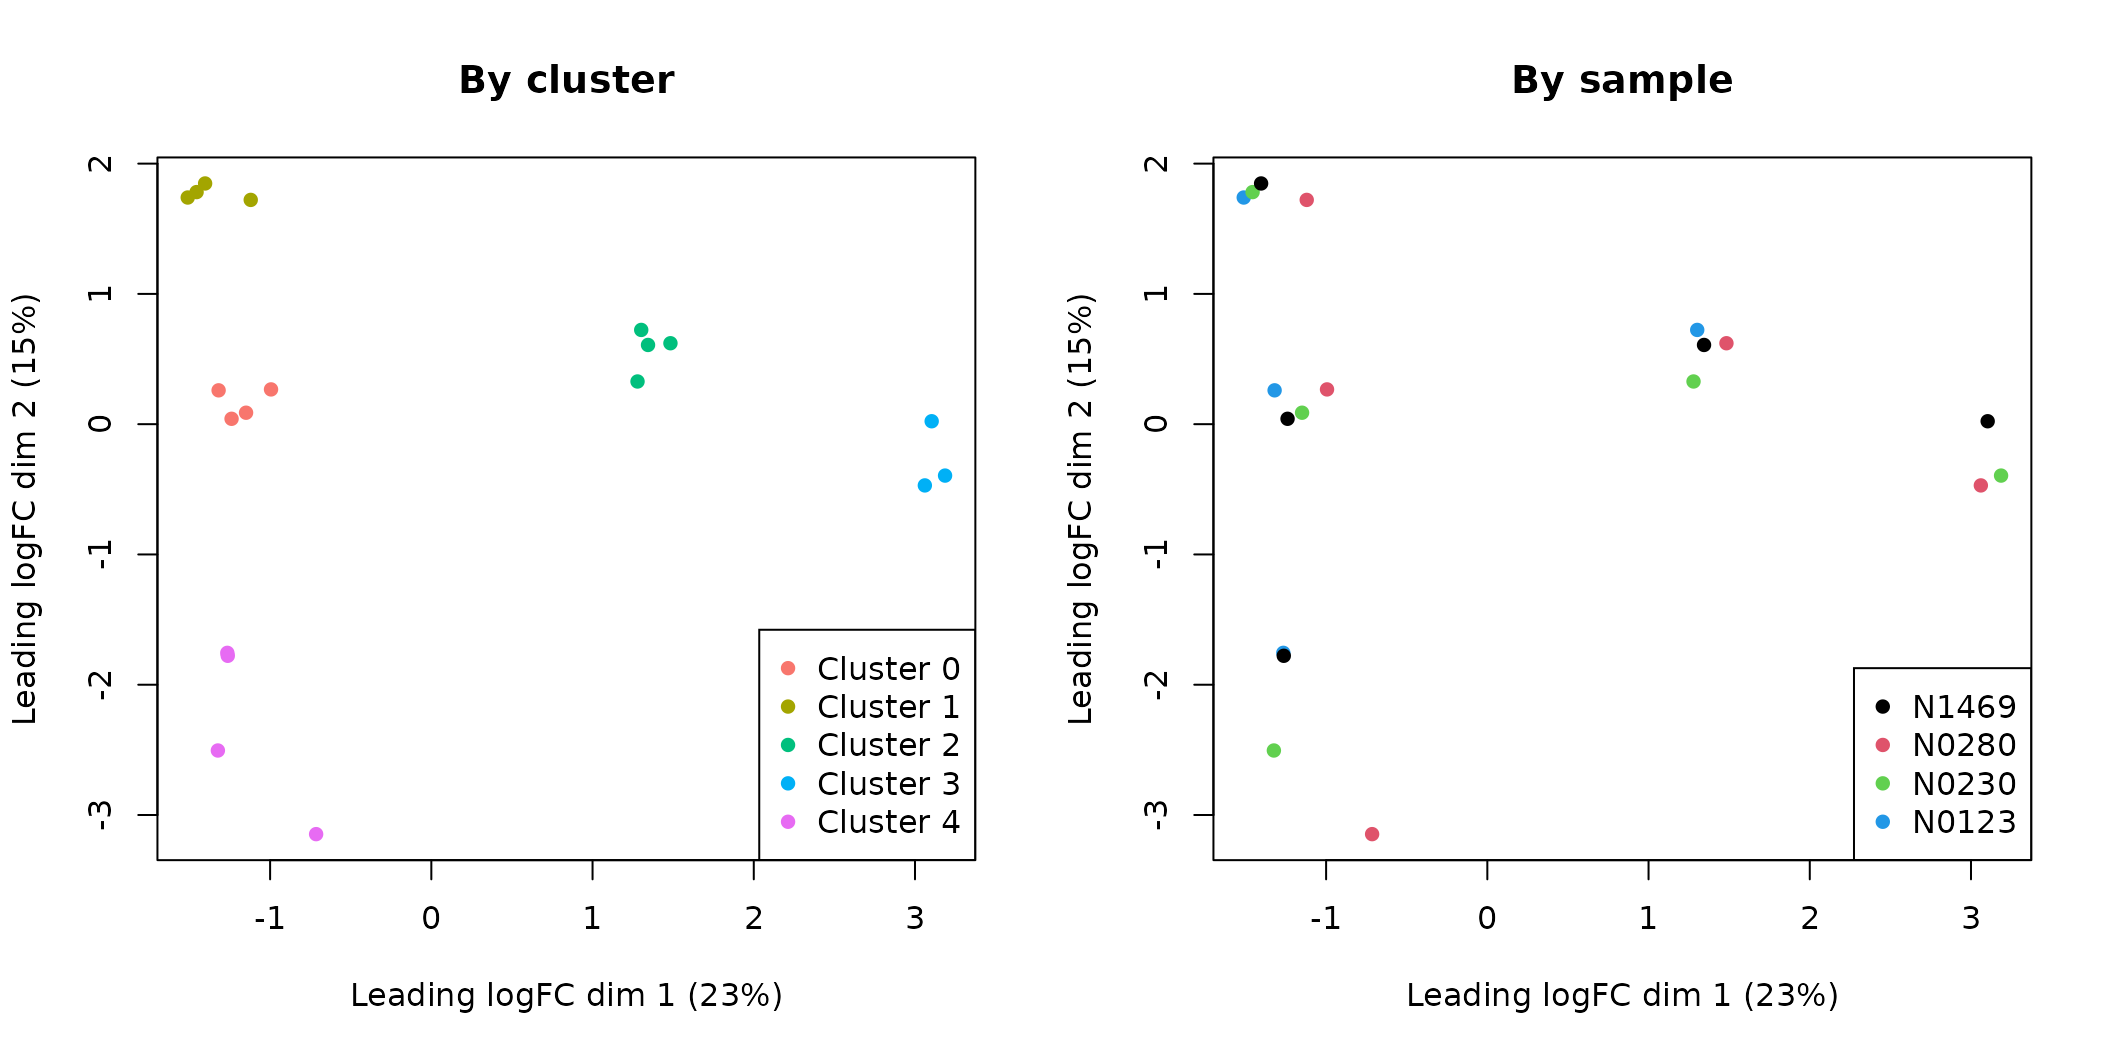 MDS plots of the pseudo-bulk samples.